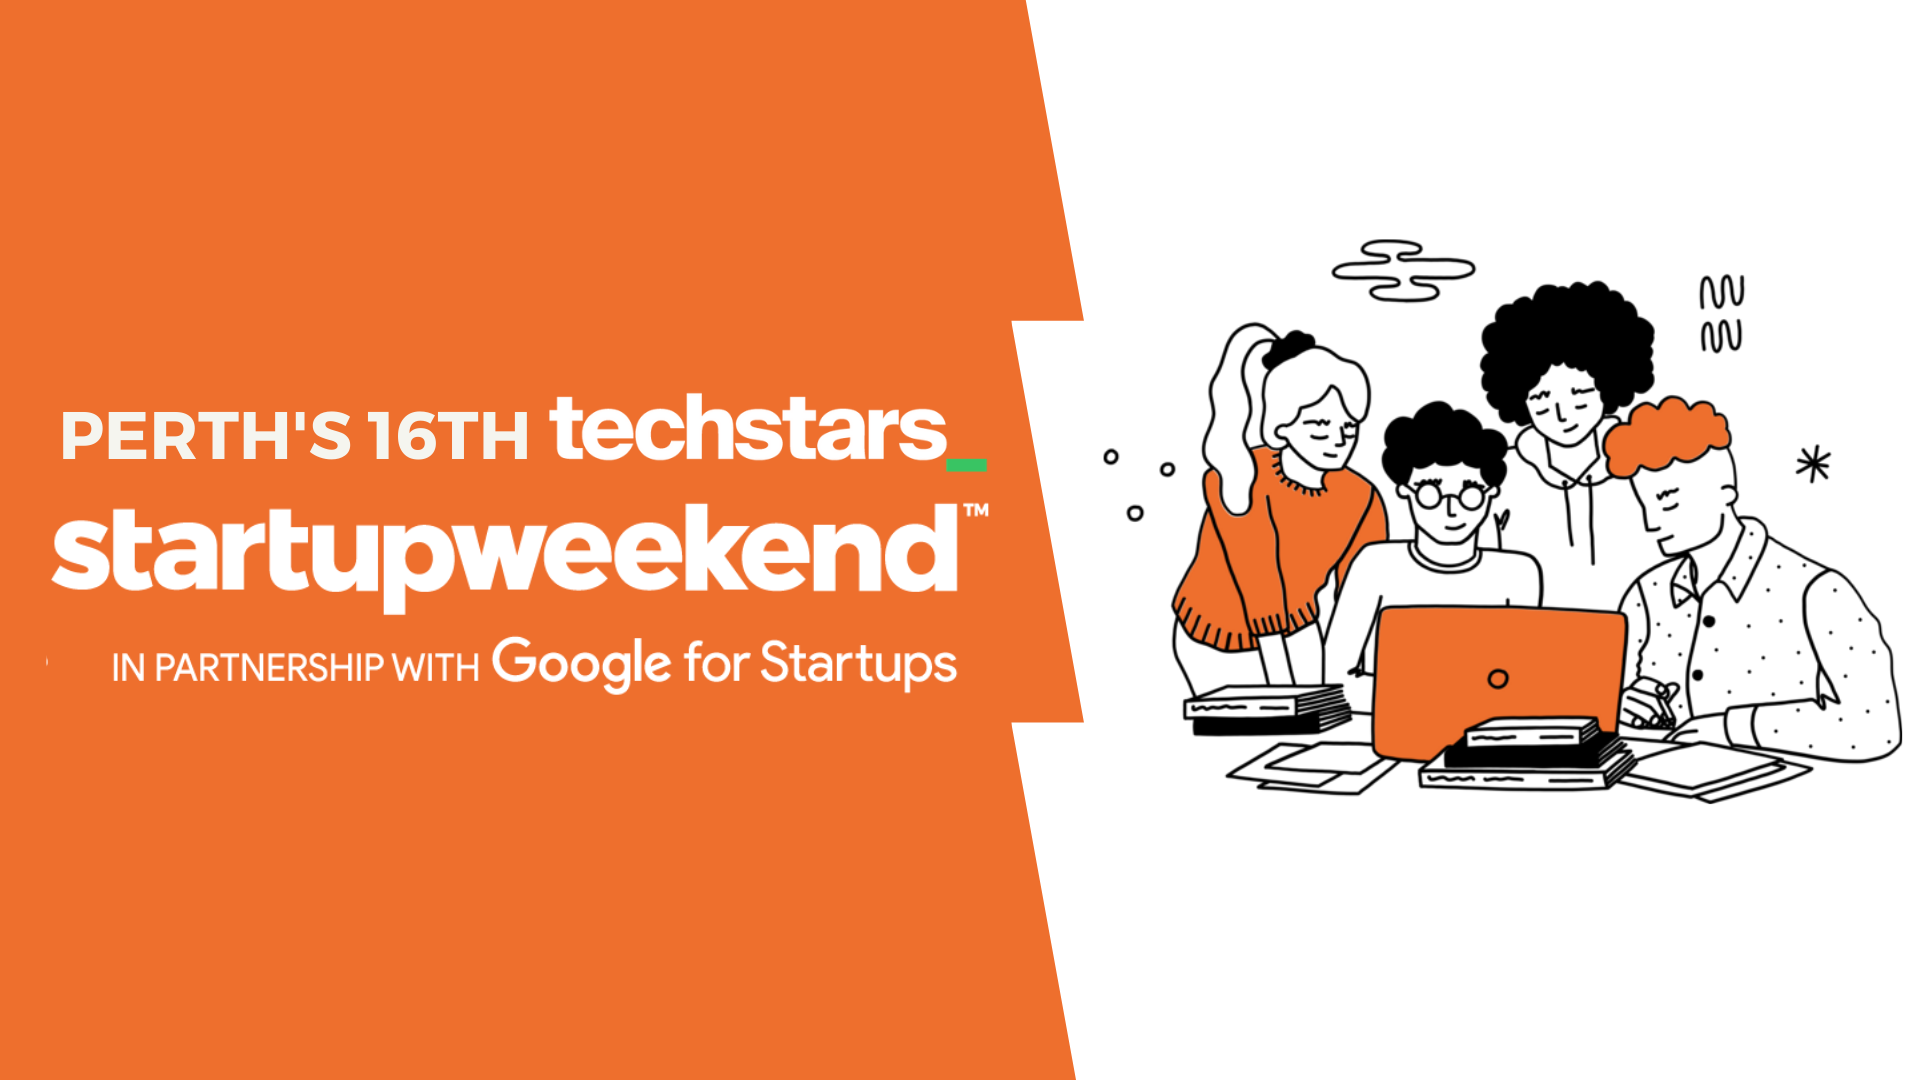 Startup Weekend is back! Bringing together budding entrepreneurs for the 16th time